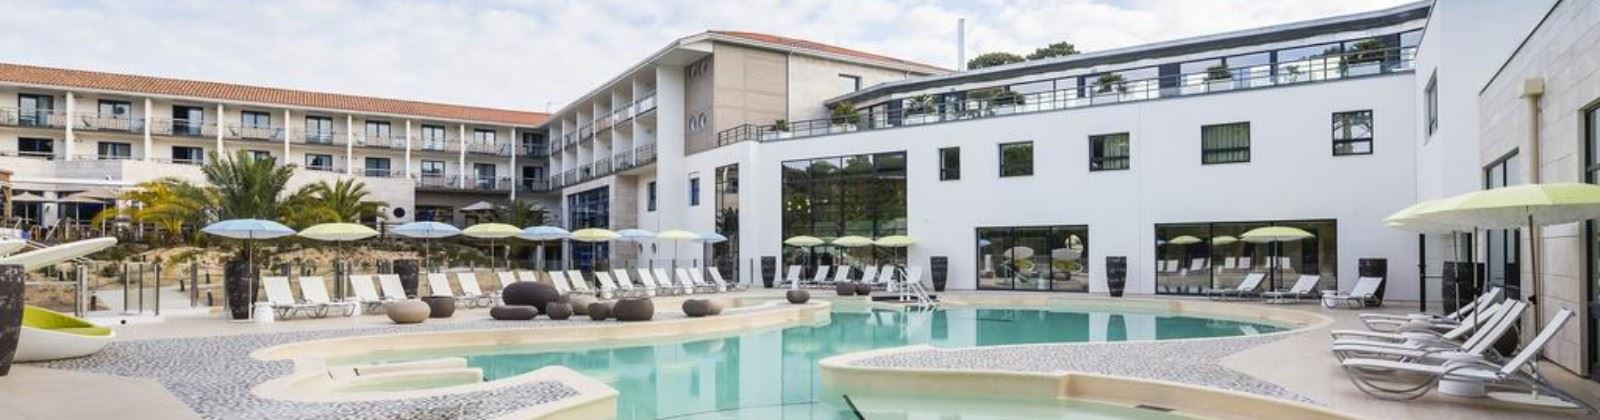 OLEVENE Image - les-bains-d-arguin-olevene-restaurant-hotel-seminaires-booking-convention-